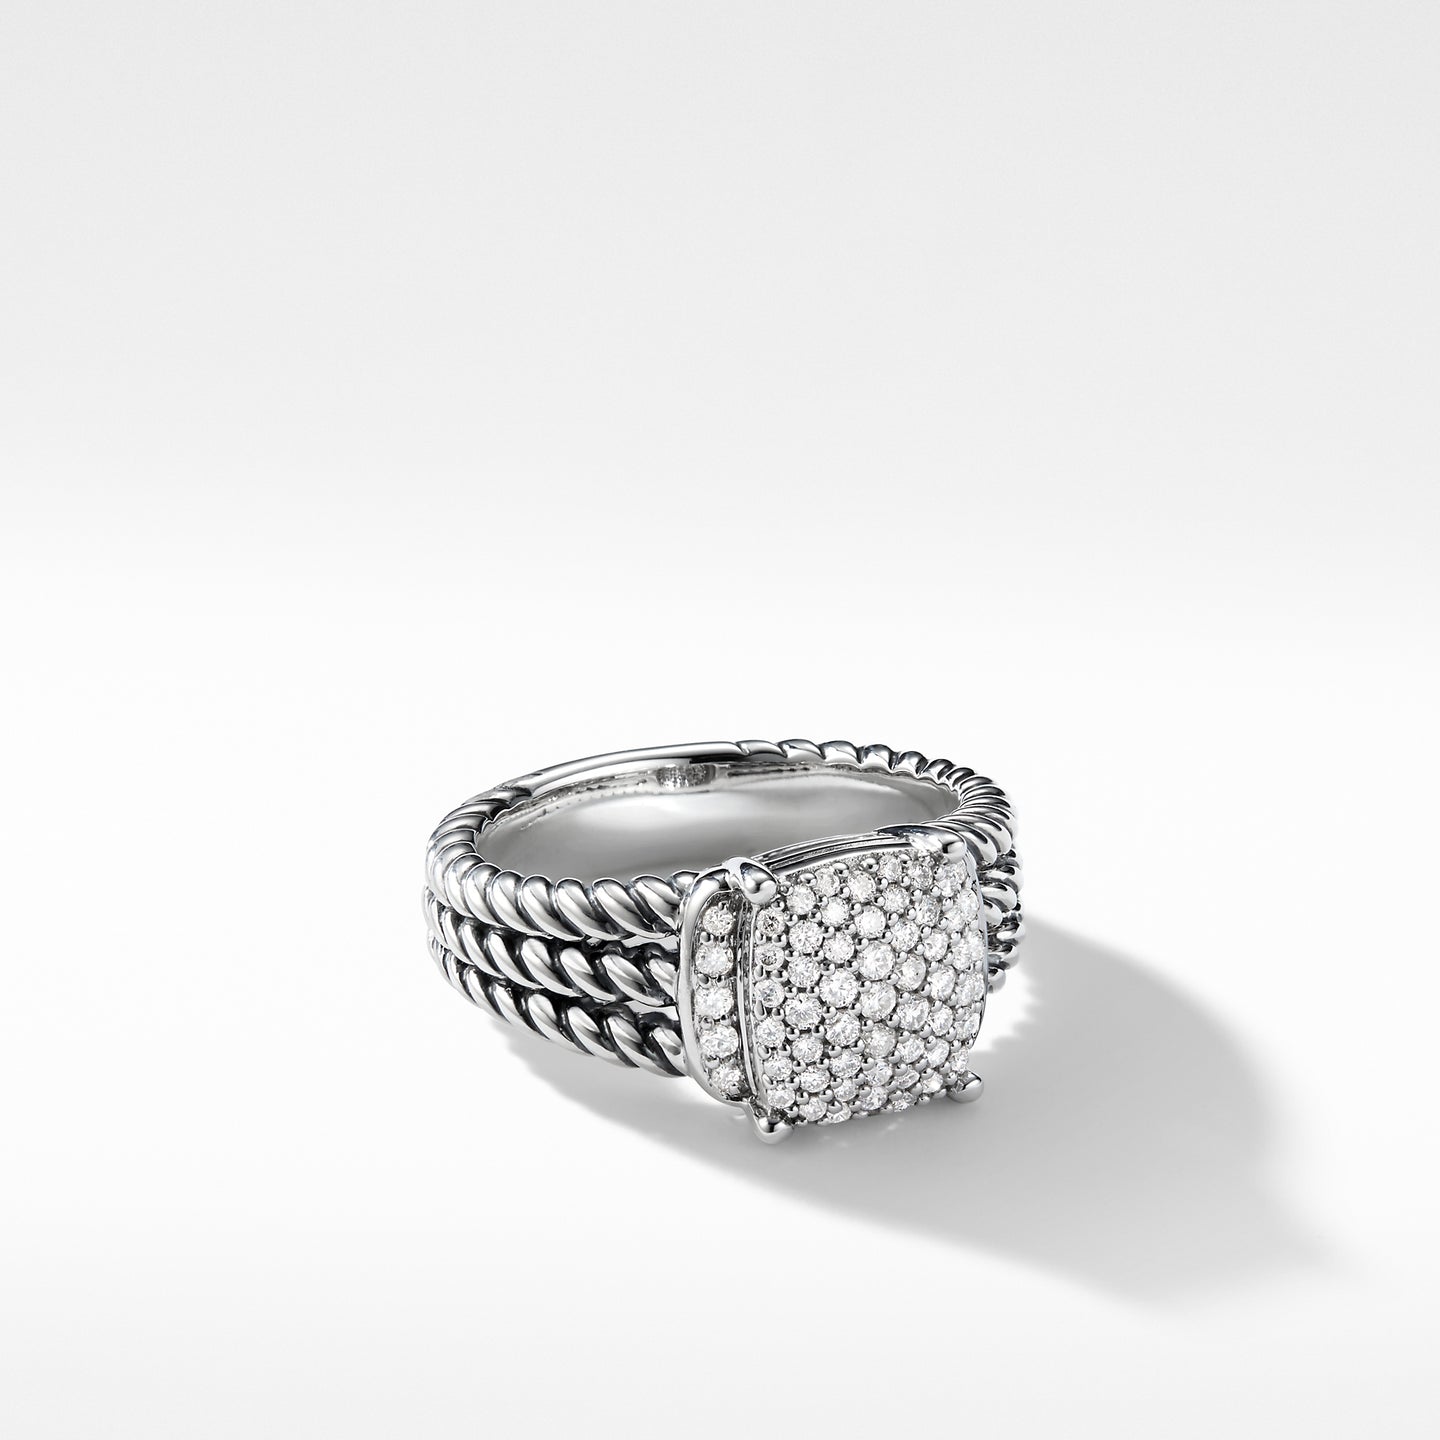 Petite Wheaton Ring with Diamonds, Size 7